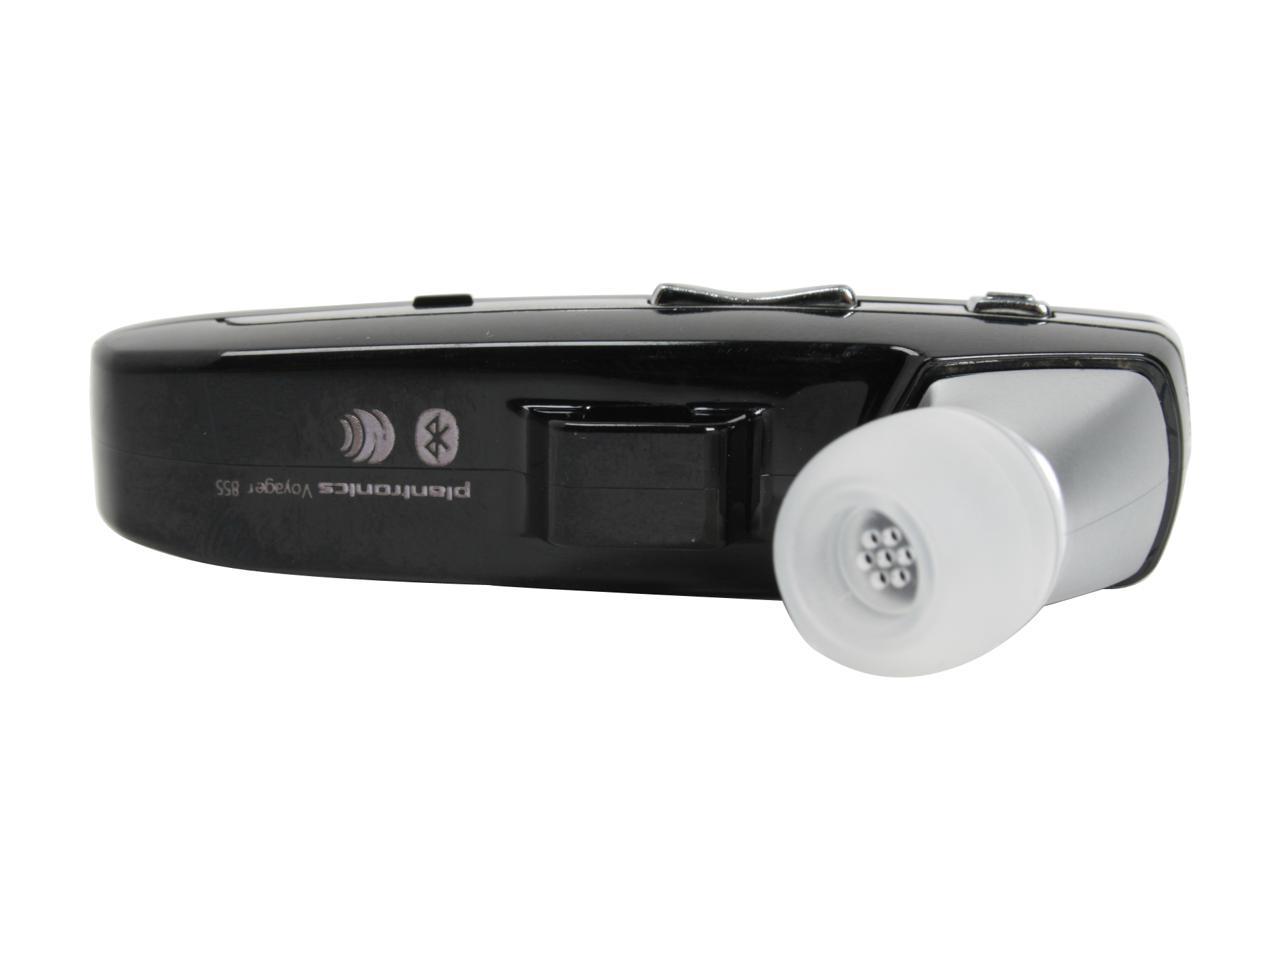 Heel boos Klik hoogtepunt PLANTRONICS In-The-Ear Bluetooth Headset (Voyager 855) - Newegg.com